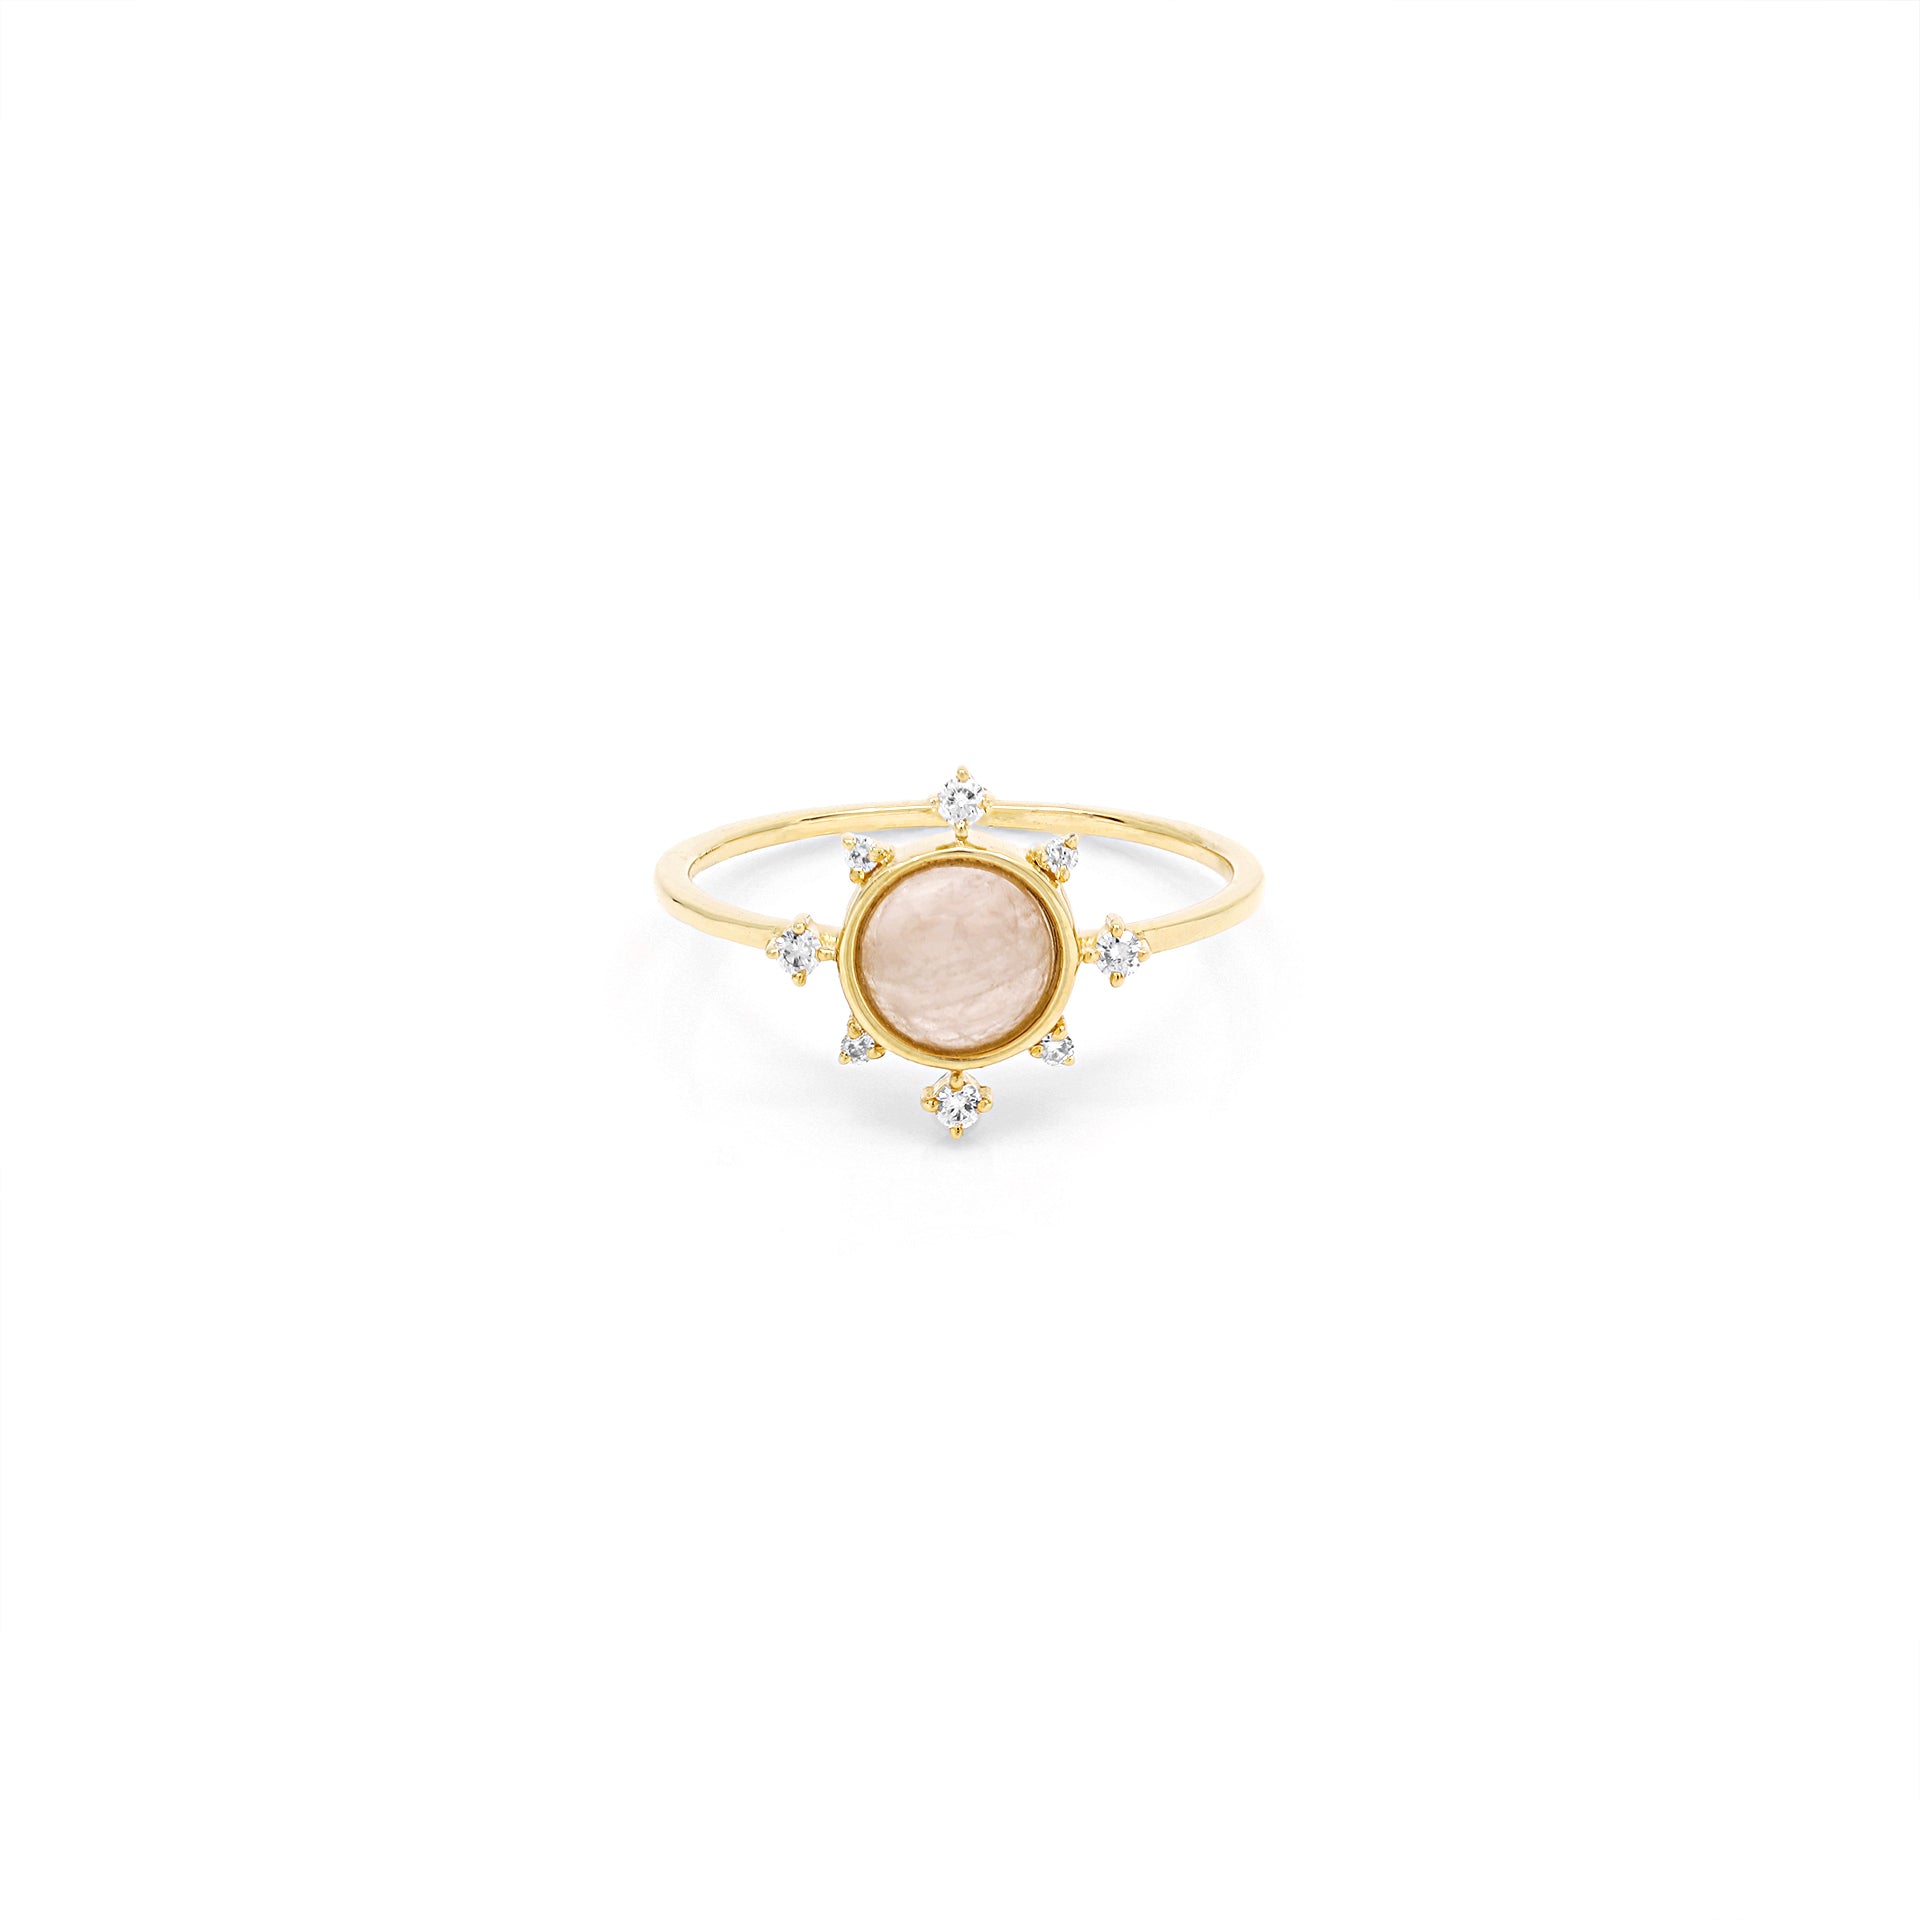 Melati Rise ring in Yellow Gold with Rose Quartz and diamonds